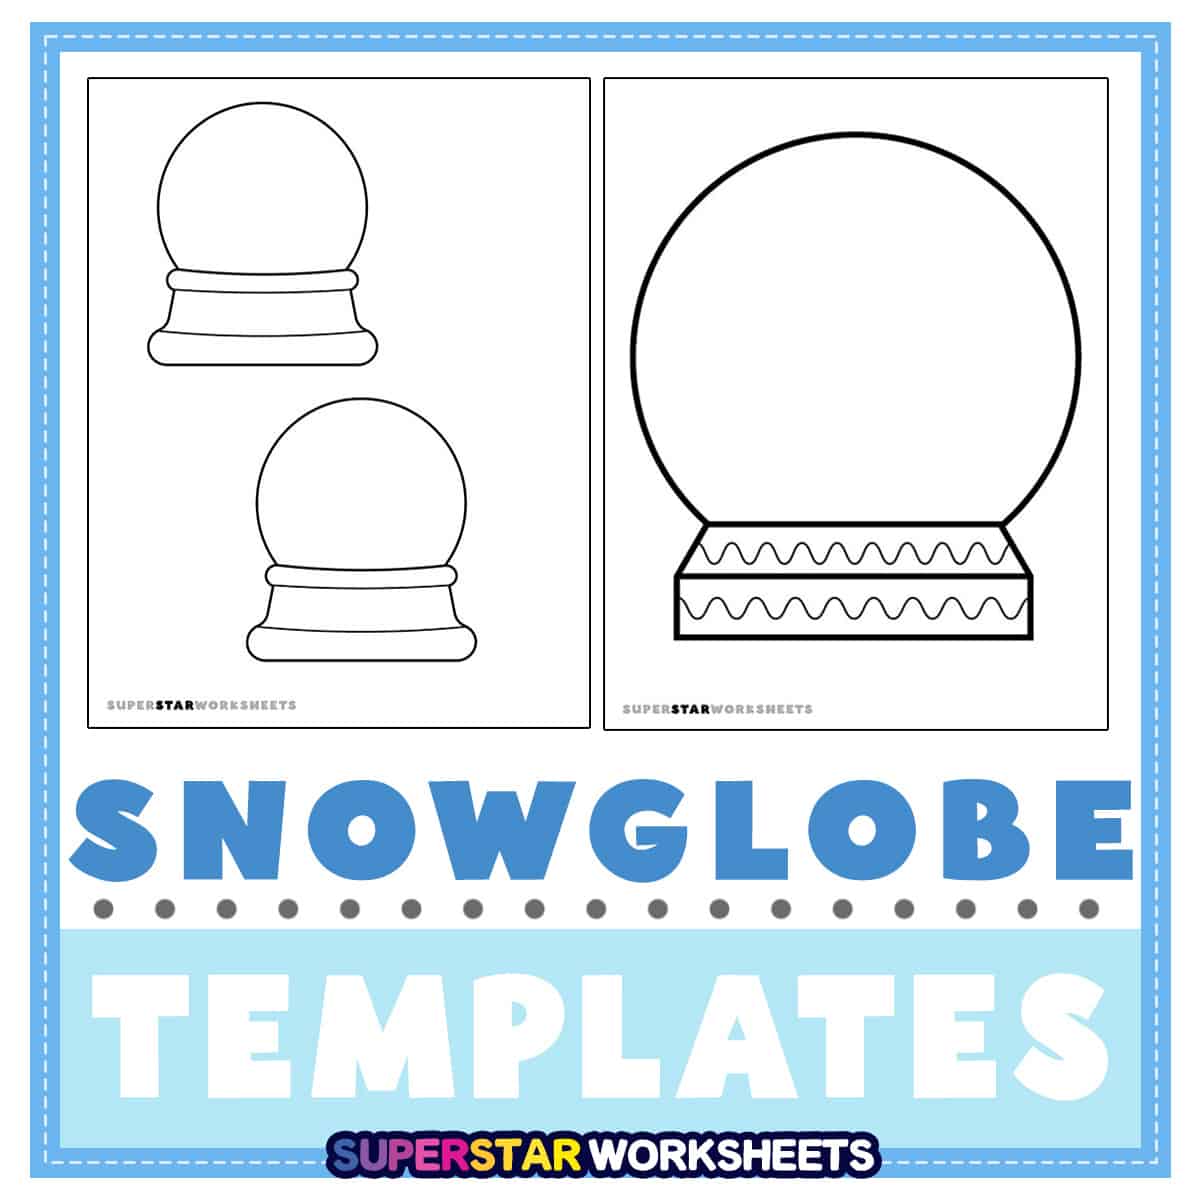 Snow globe templates